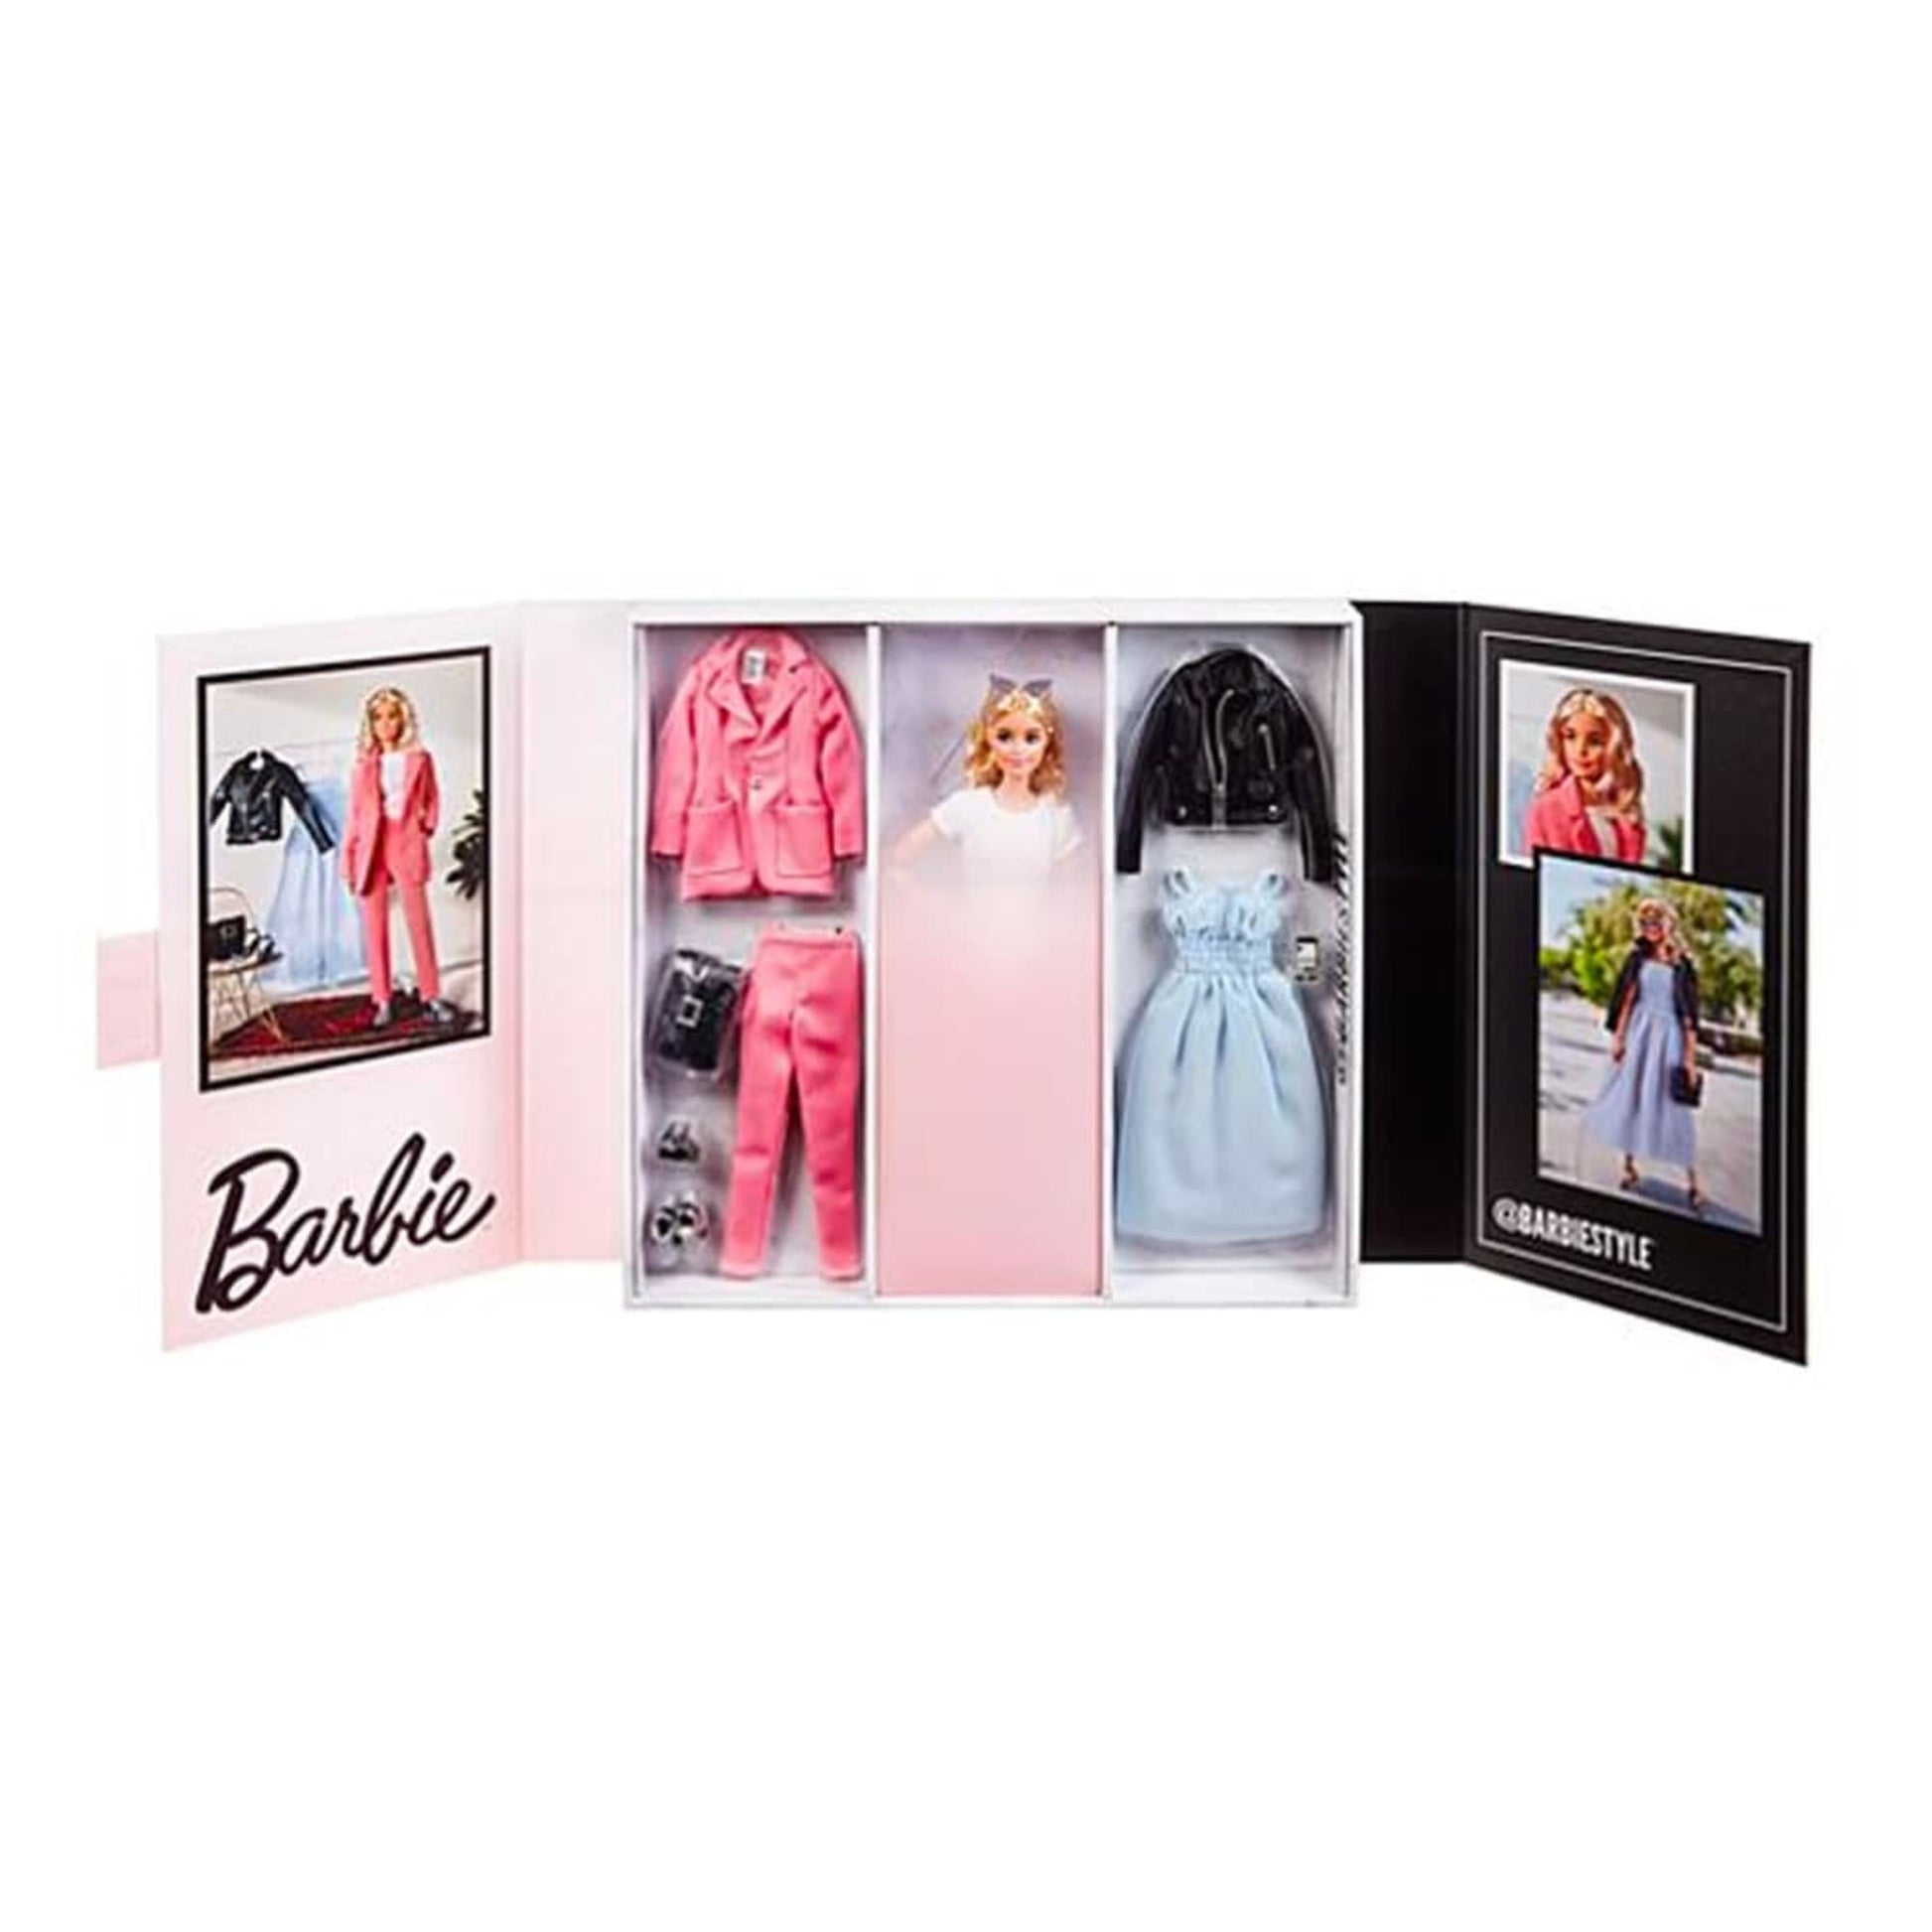 Barbie Signature BarbieStyle 4 Doll 